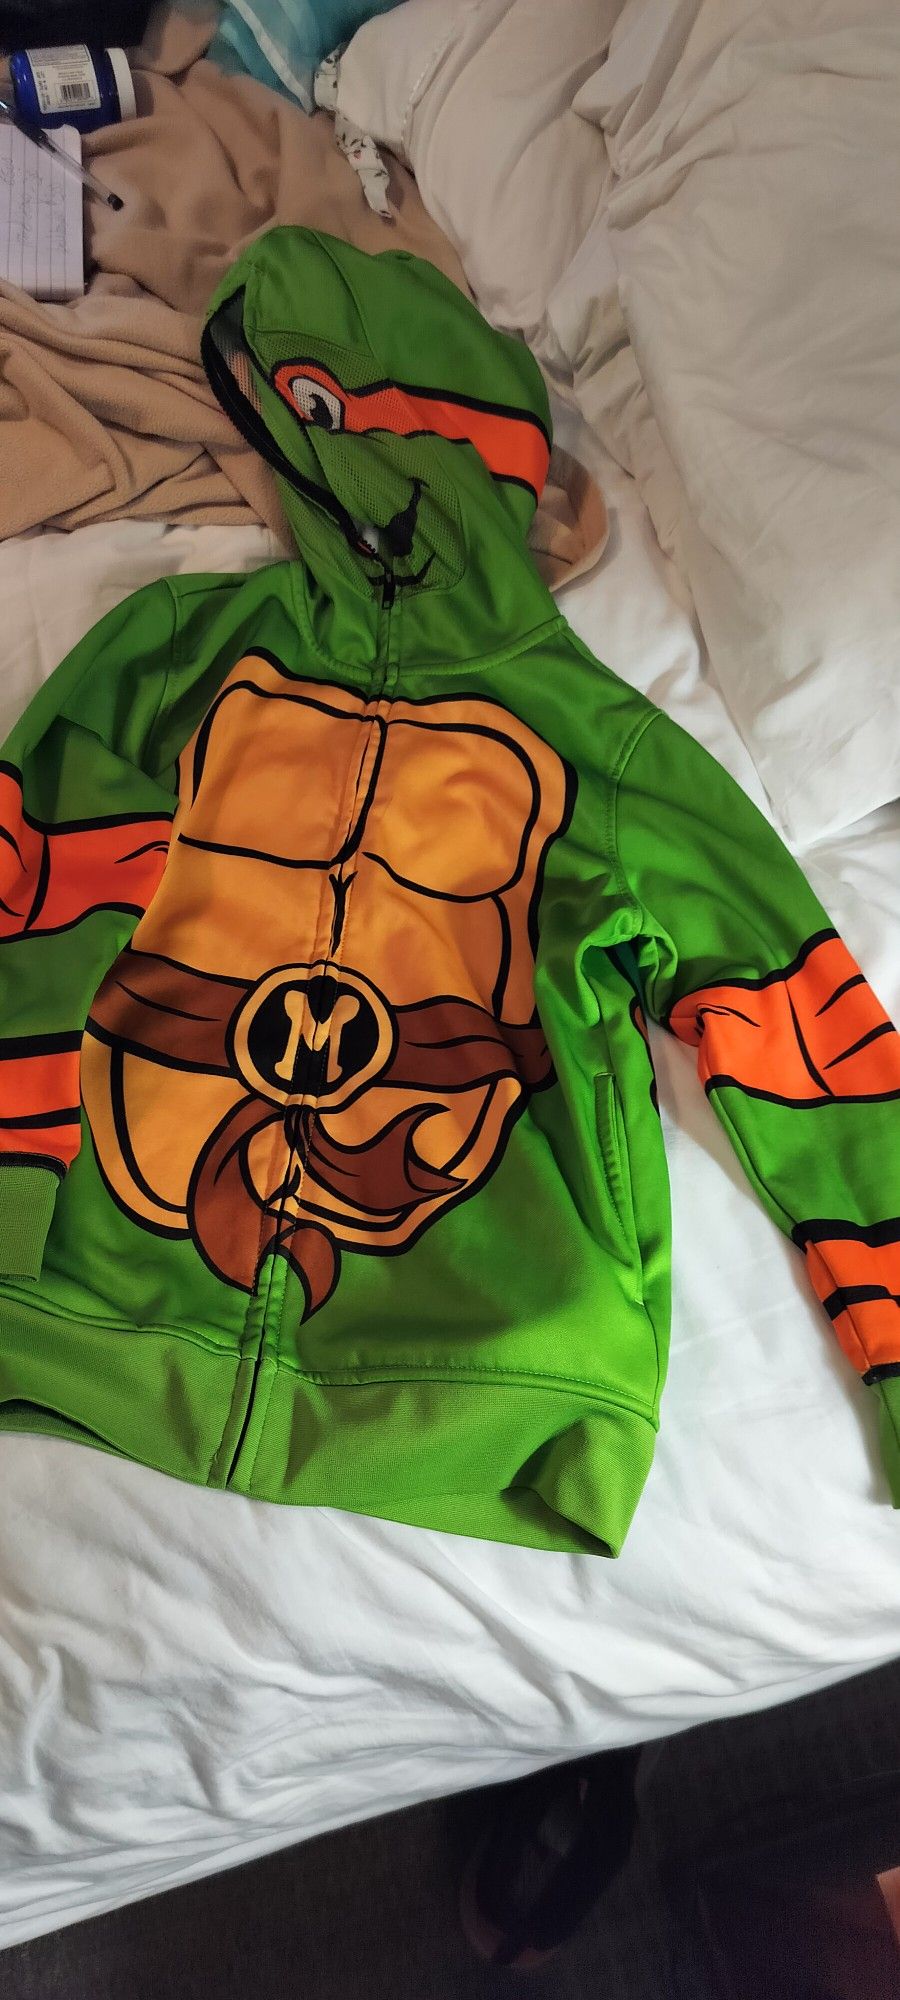 Nickelodeon Mutant Ninja Turtles Sweatshirt Hooded Remarkable Kids Size Small Size 8/ 10